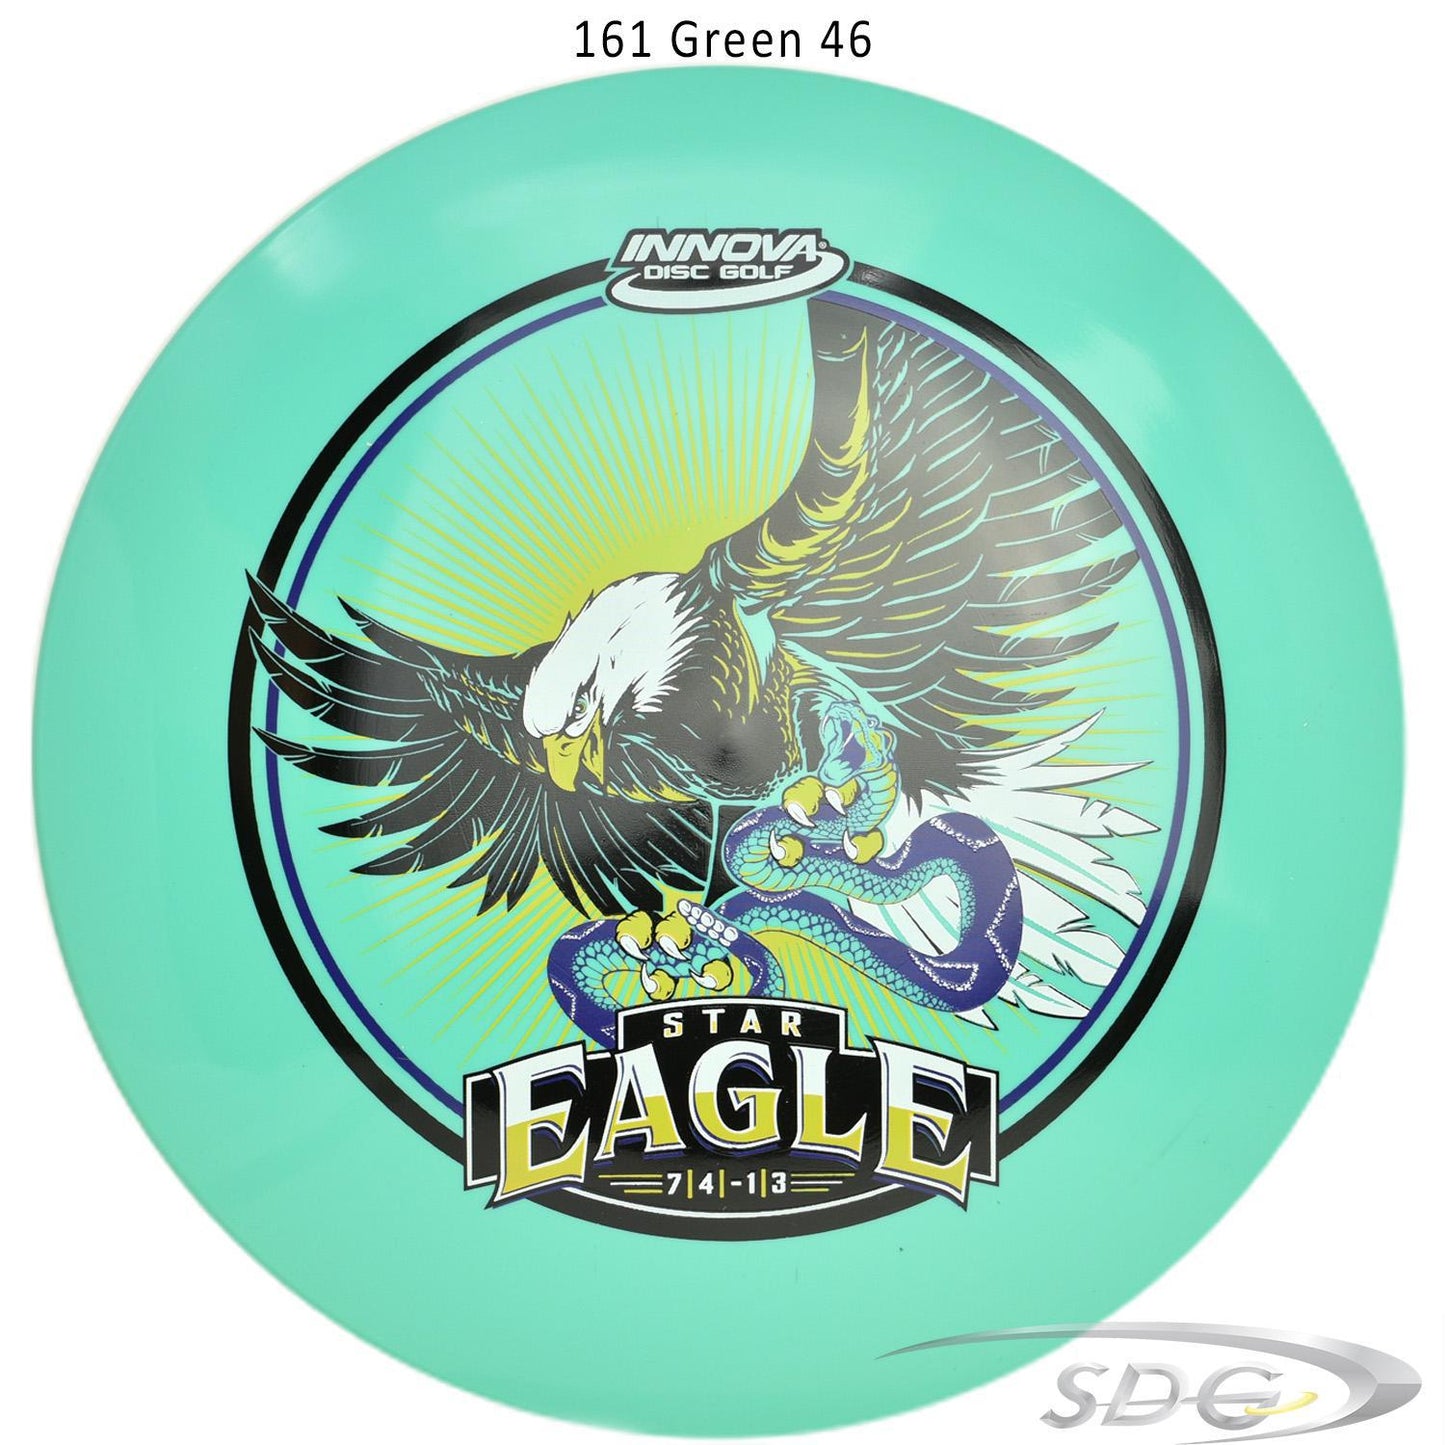 innova-star-eagle-disc-golf-fairway-driver 161 Green 46